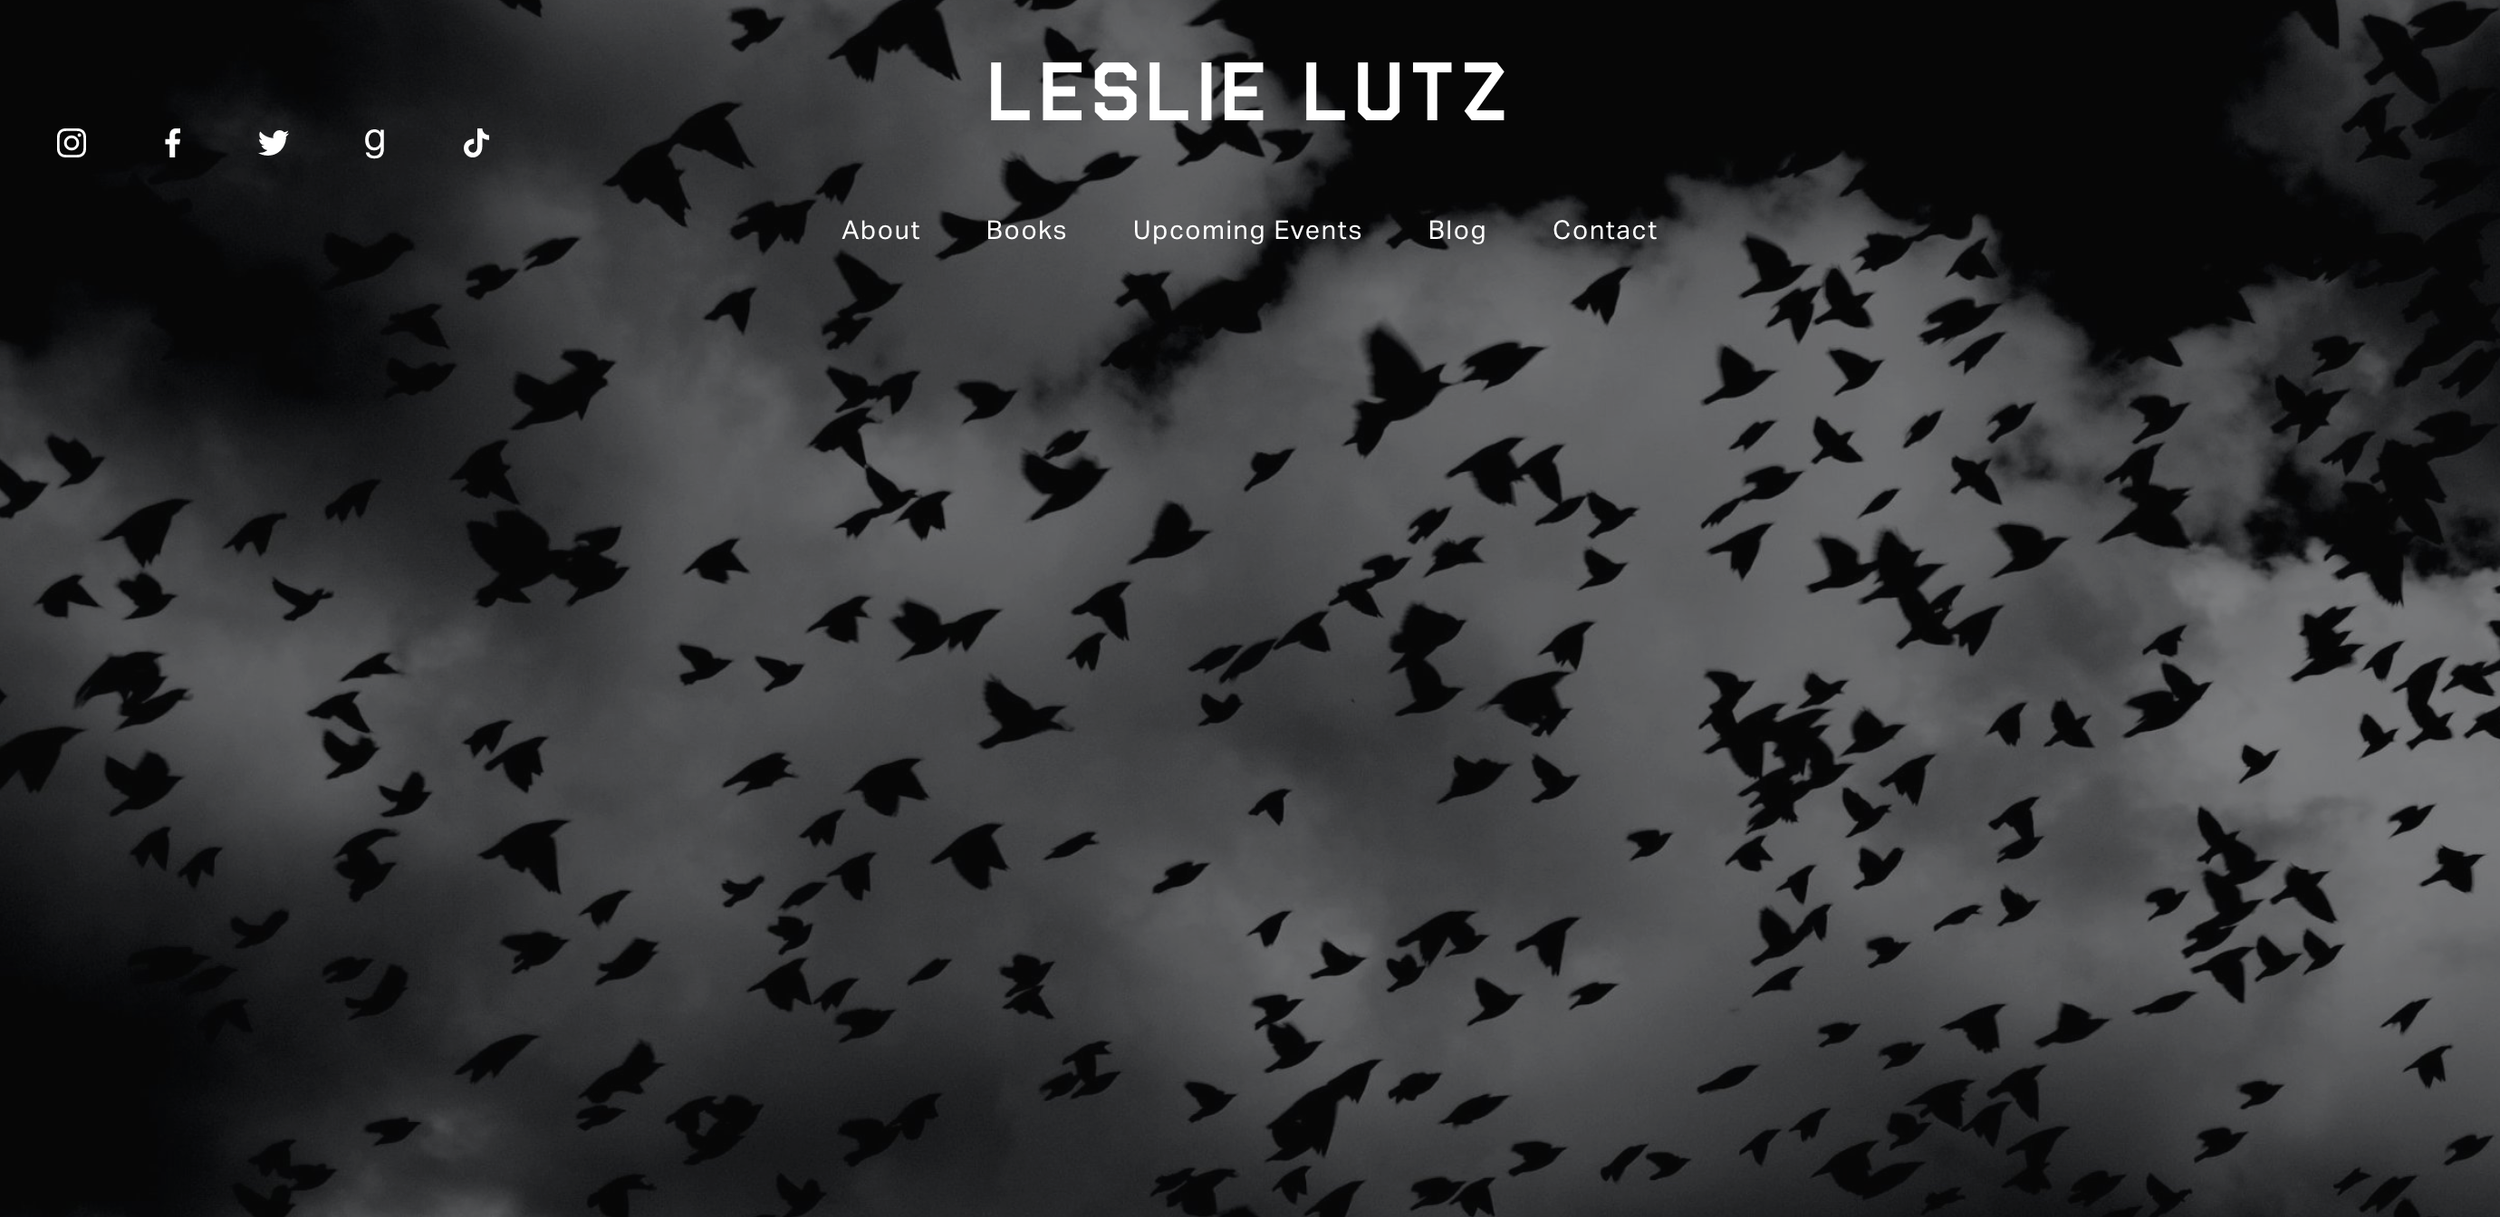 Leslie Lutz